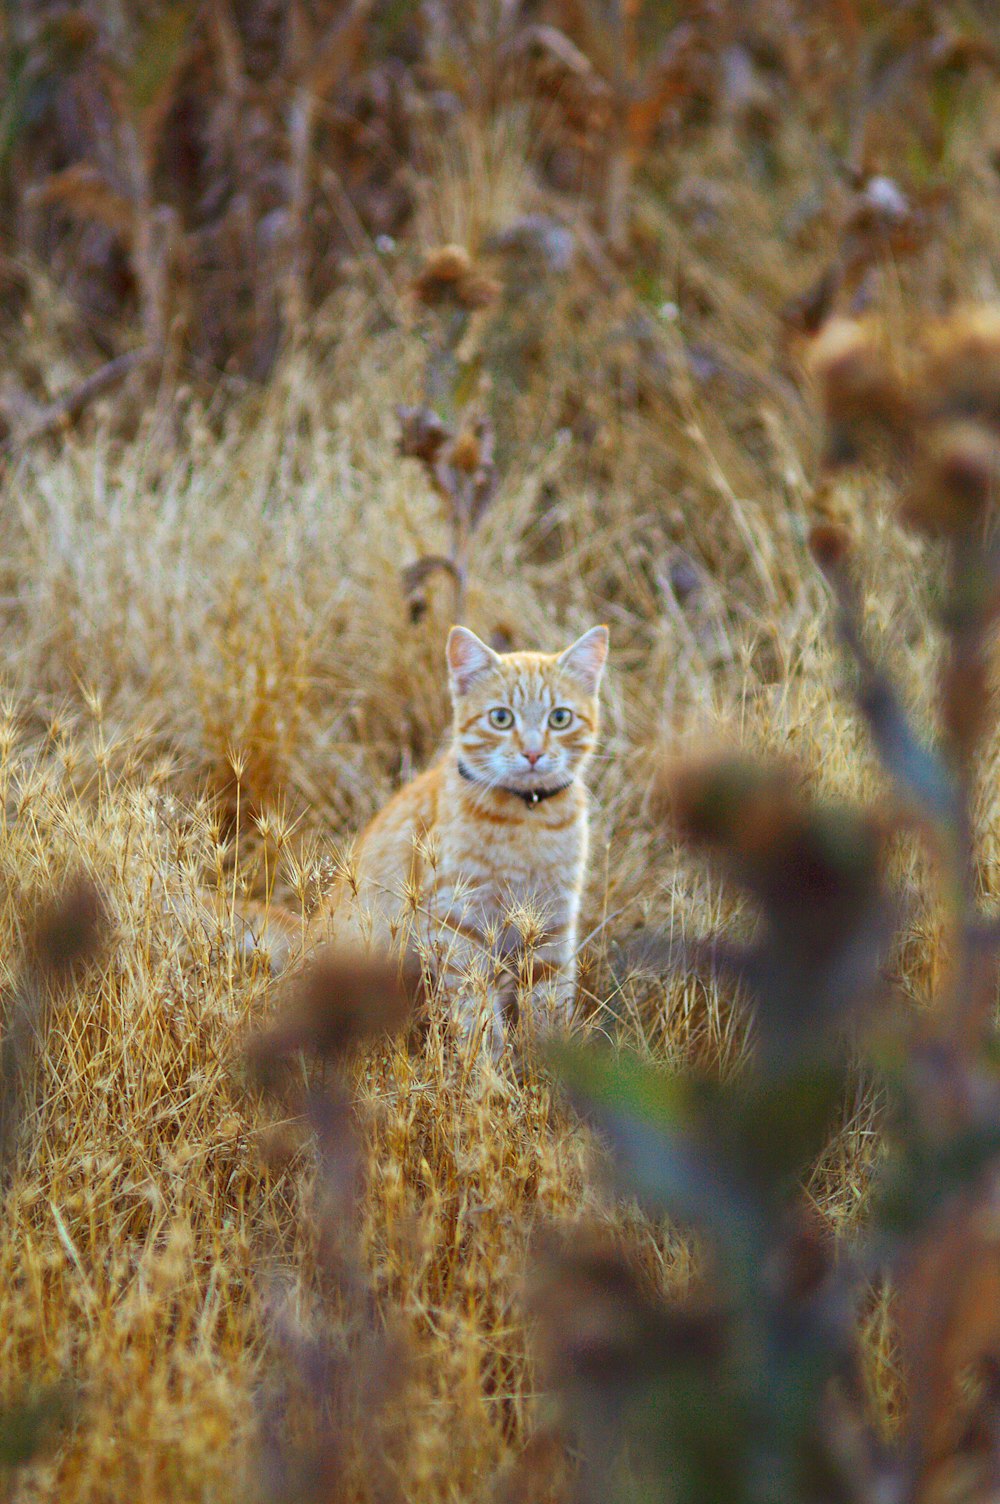 a cat sitting in a field of tall grass